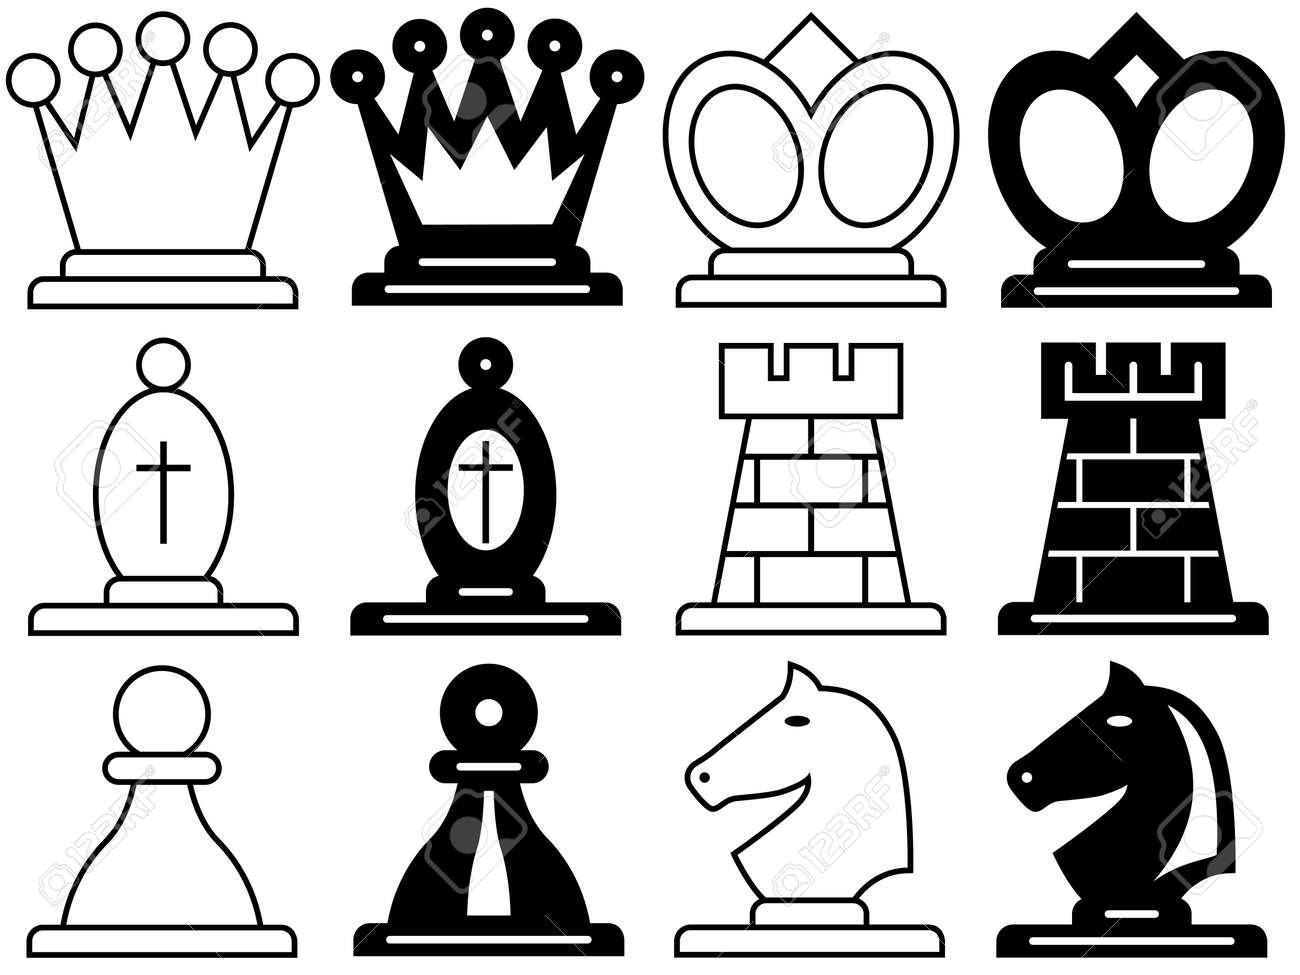 Шахматные фигуры для печати